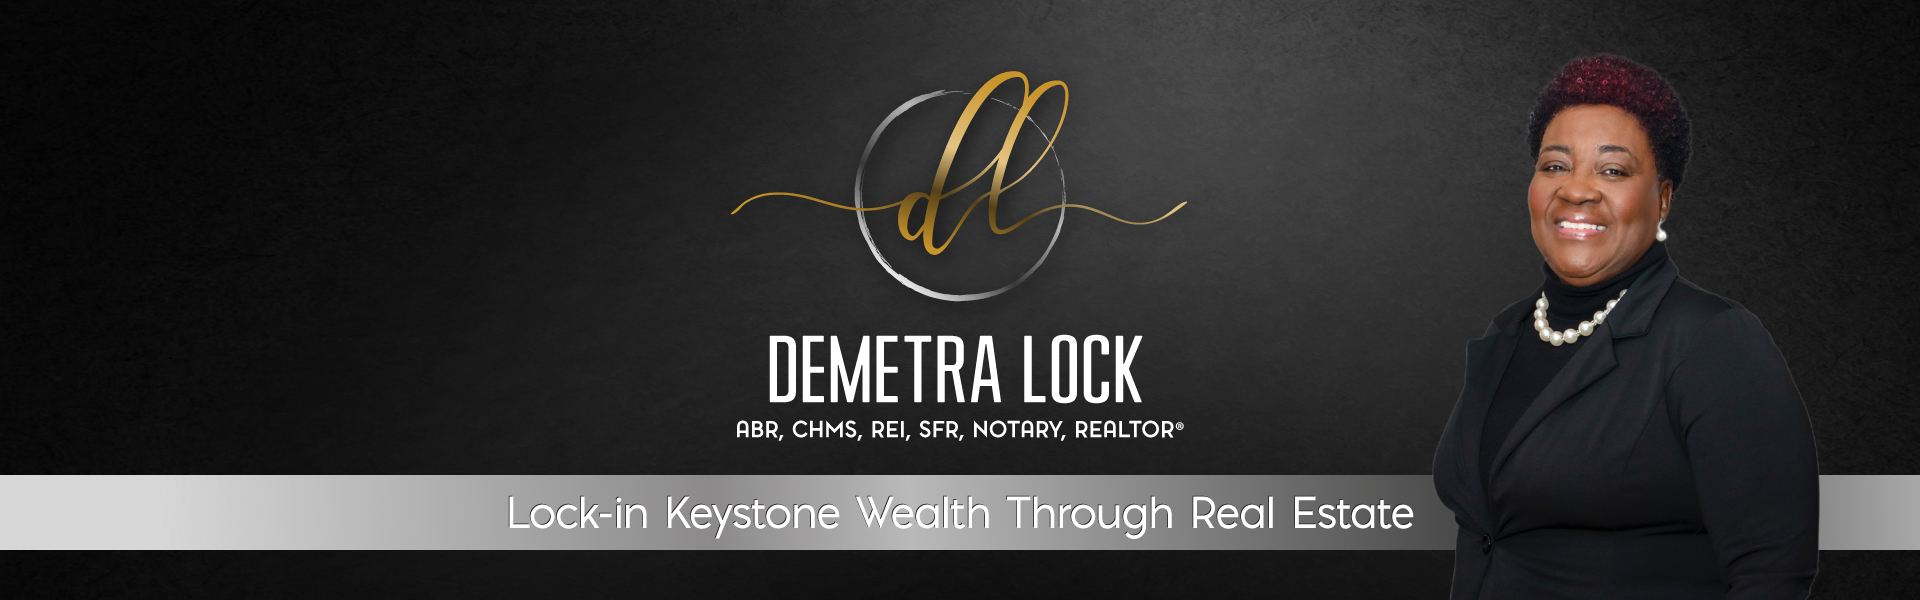 Demetra Lock